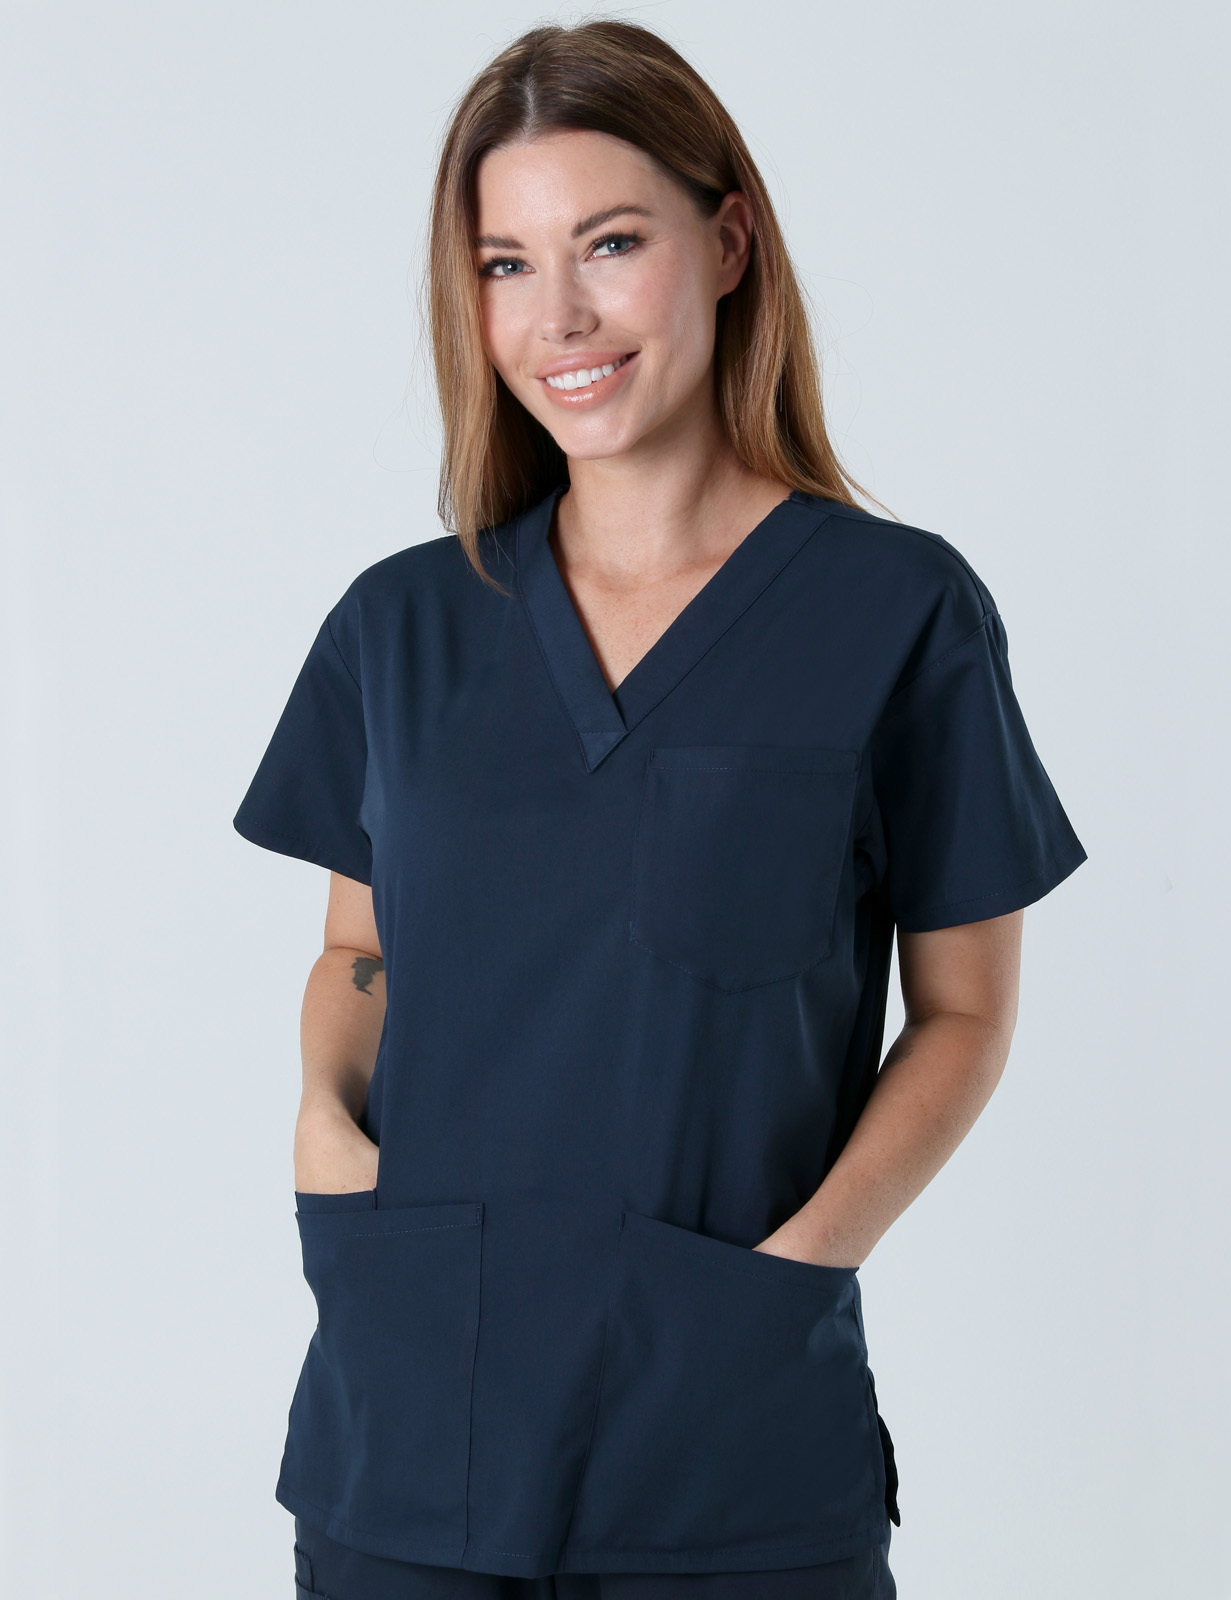 Canberra Hospital Stroke Unit Doctor Uniform Set Bndle (4 Pocket Top and Cargo Pants in Navy + 3 Logos)